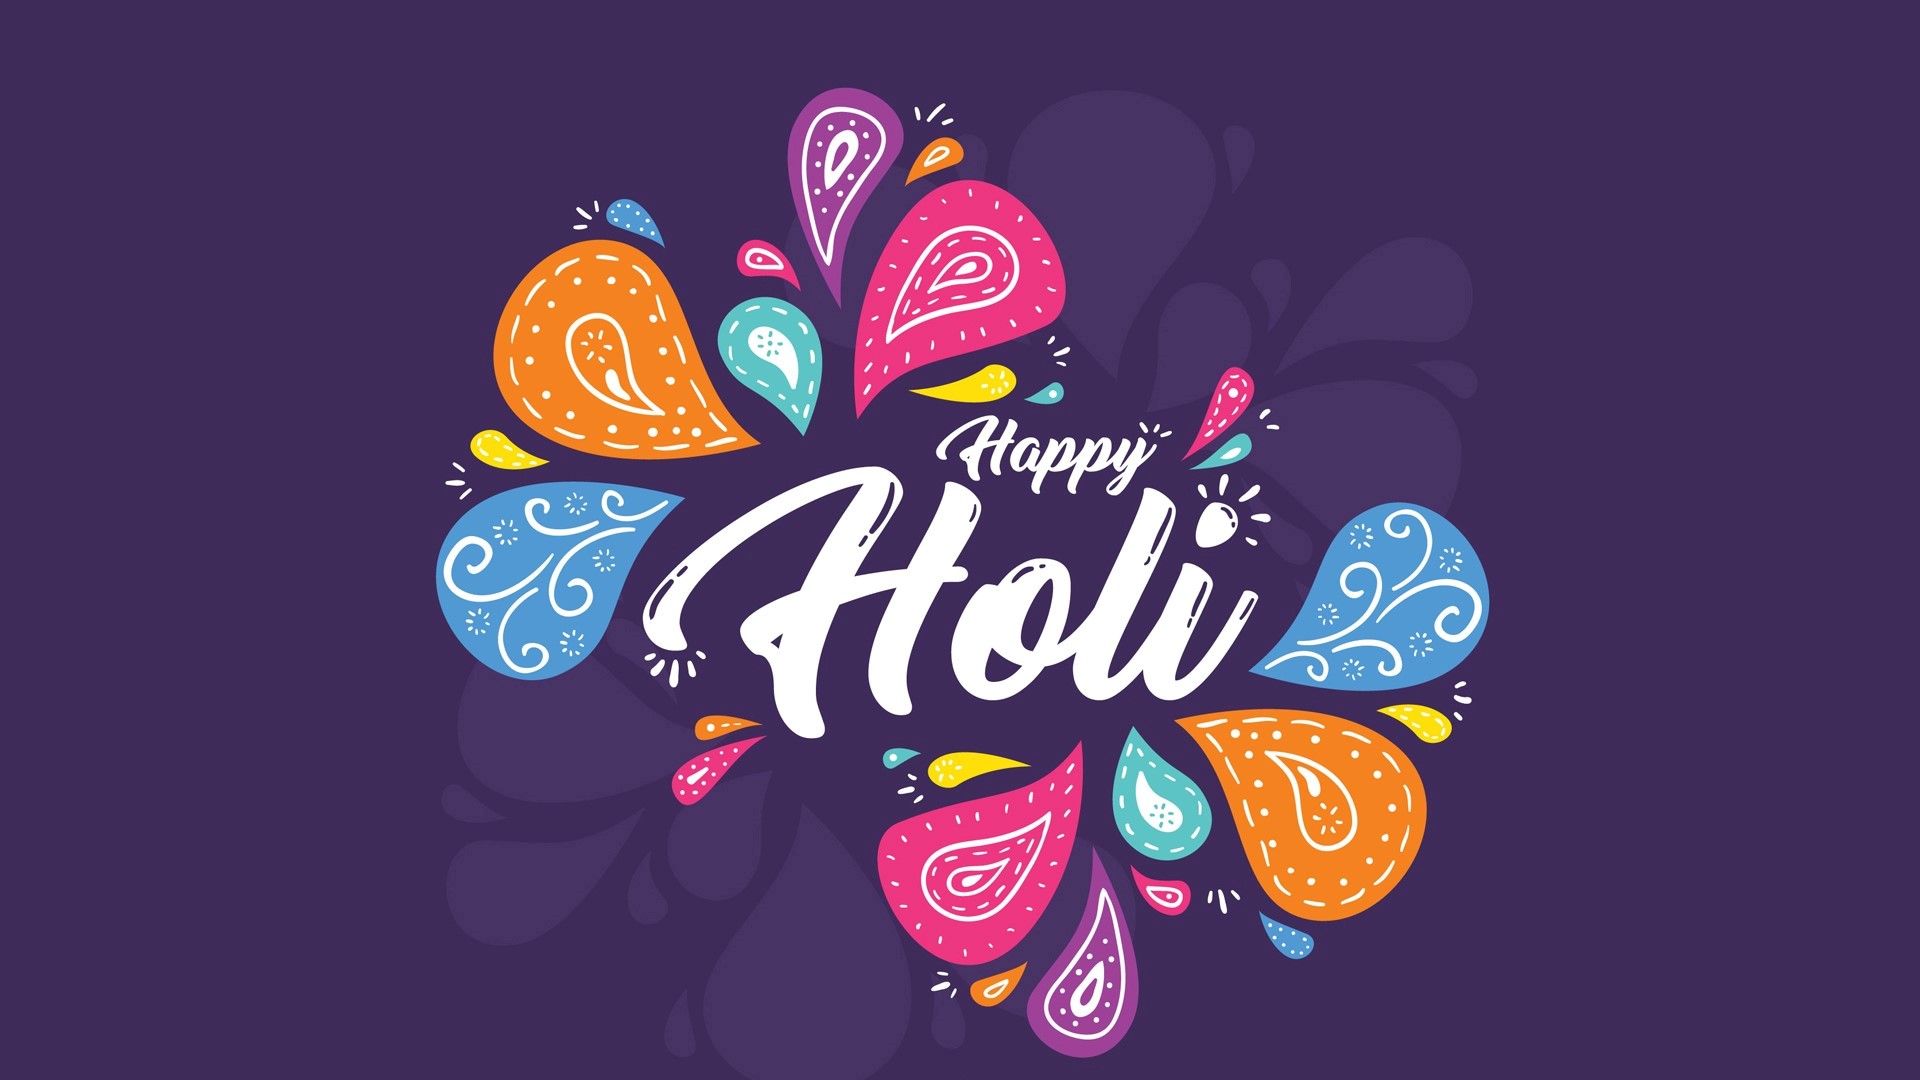 Happy Holi Holi Images 2019 , HD Wallpaper & Backgrounds